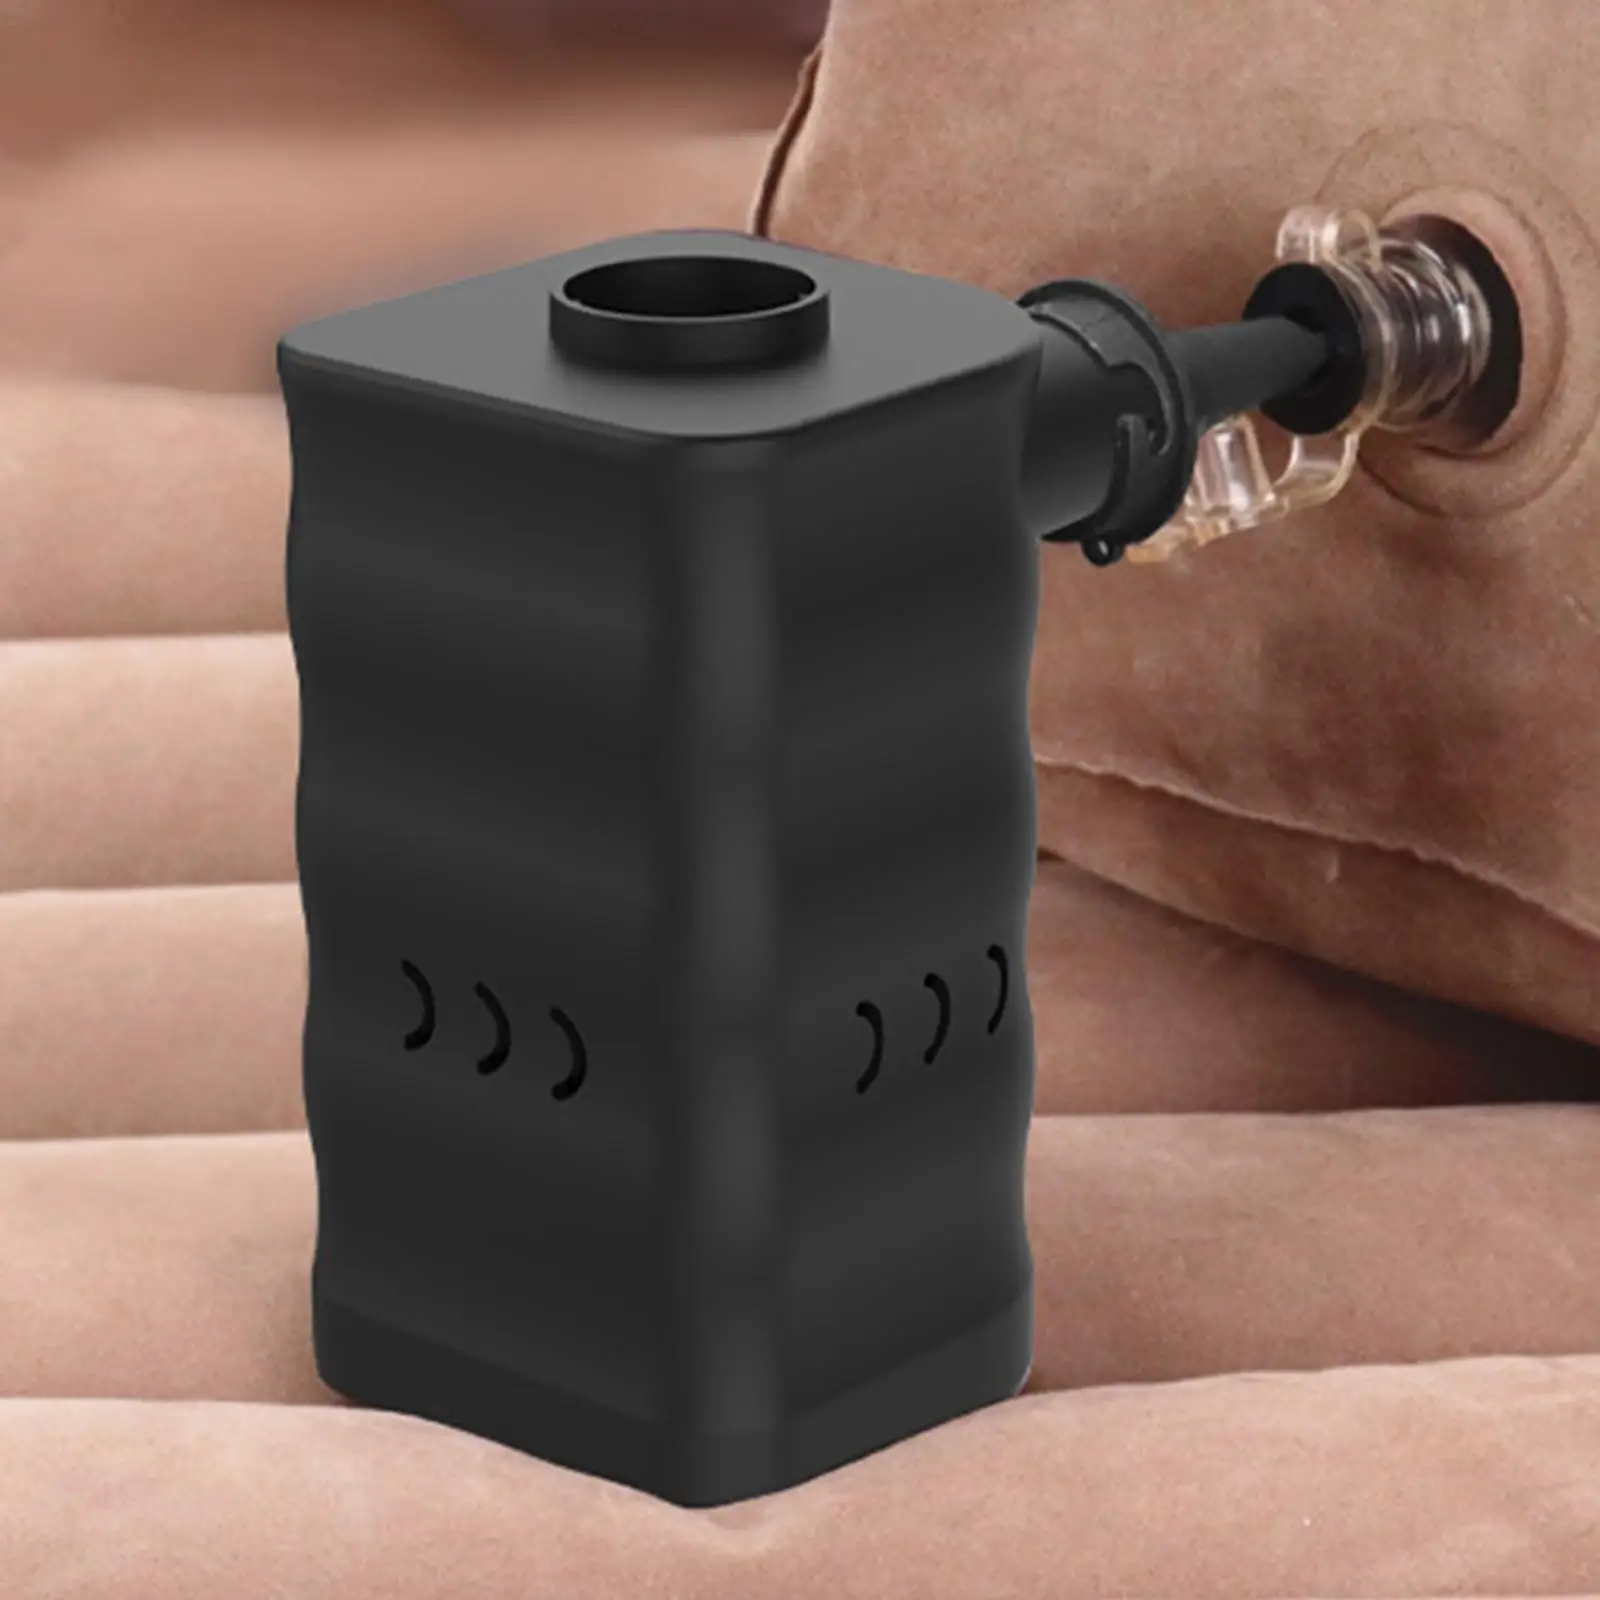  Pump Inflator Powerful Blower High Pressure Toy Inflatable Rechargeable Black Pump Inflator Air Mattress